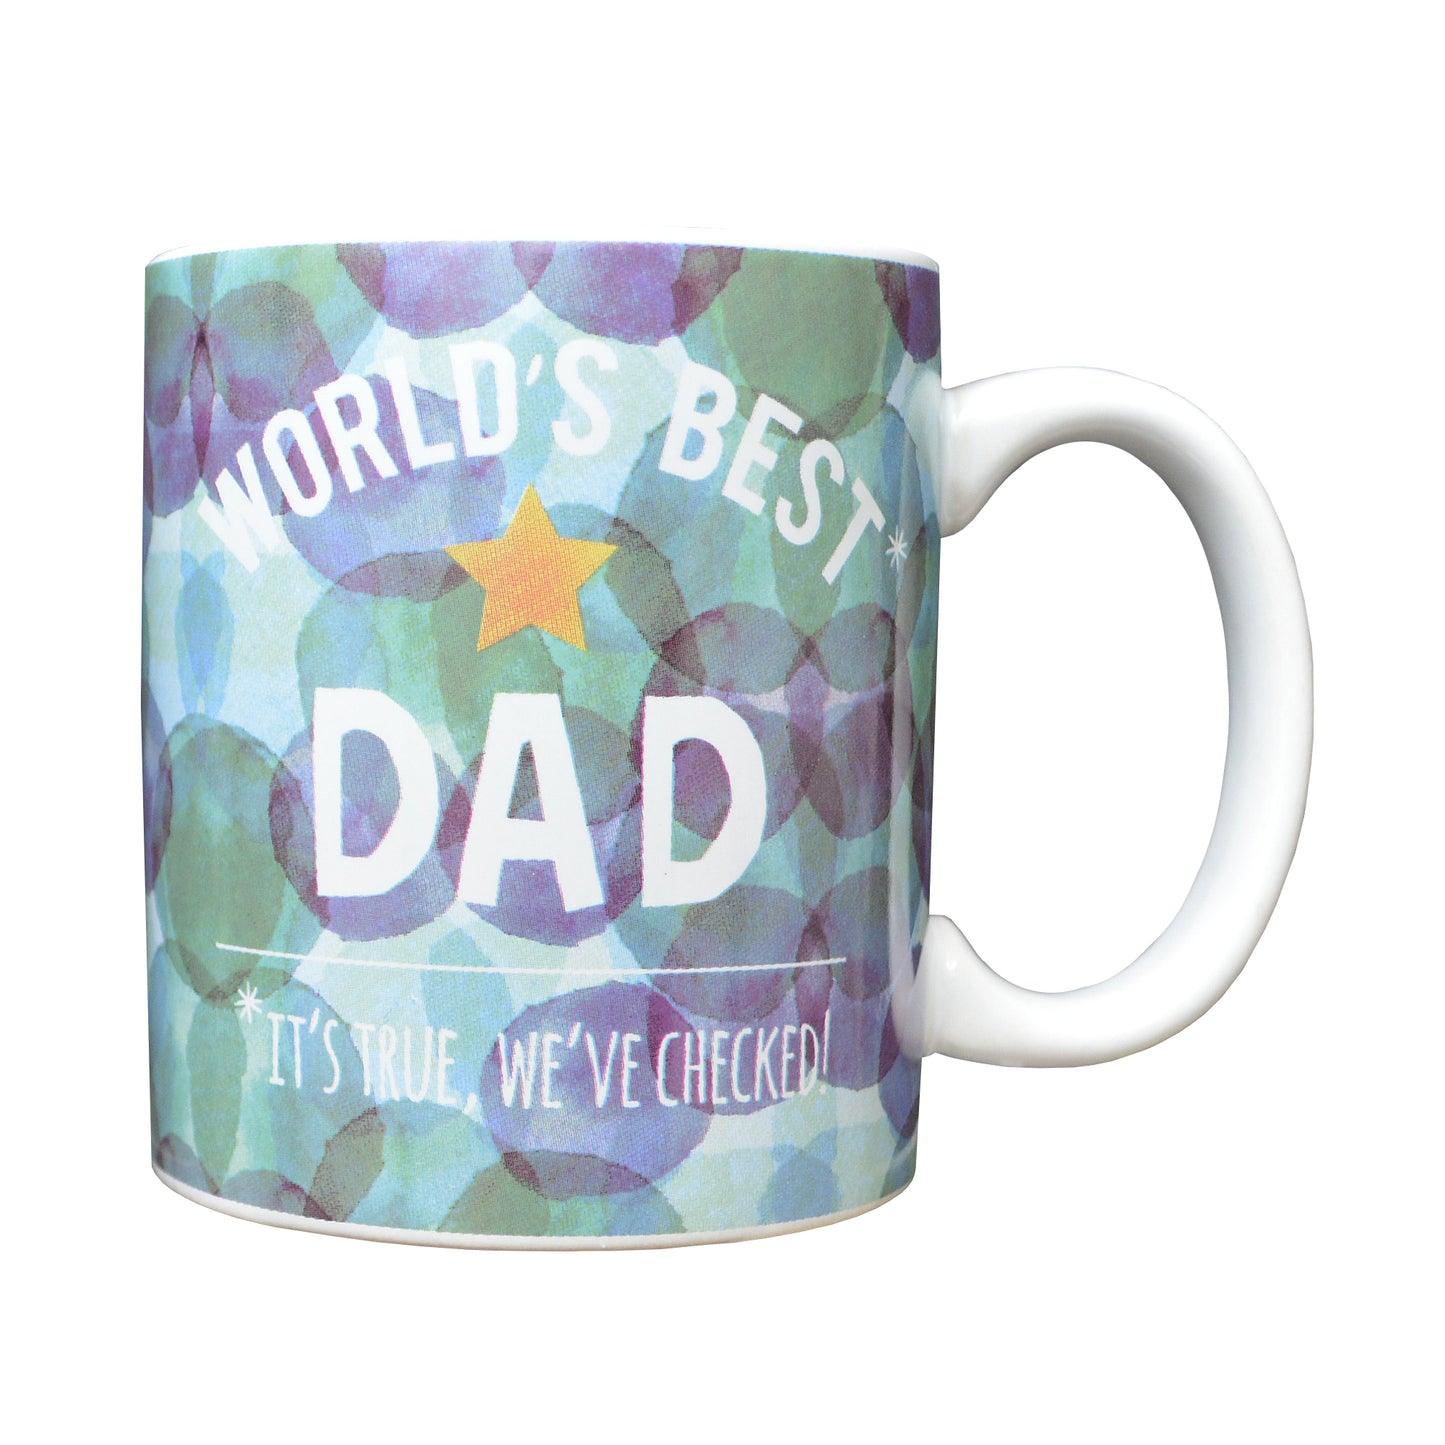 The World's Best Dad Ceramic Mug In Gift Box